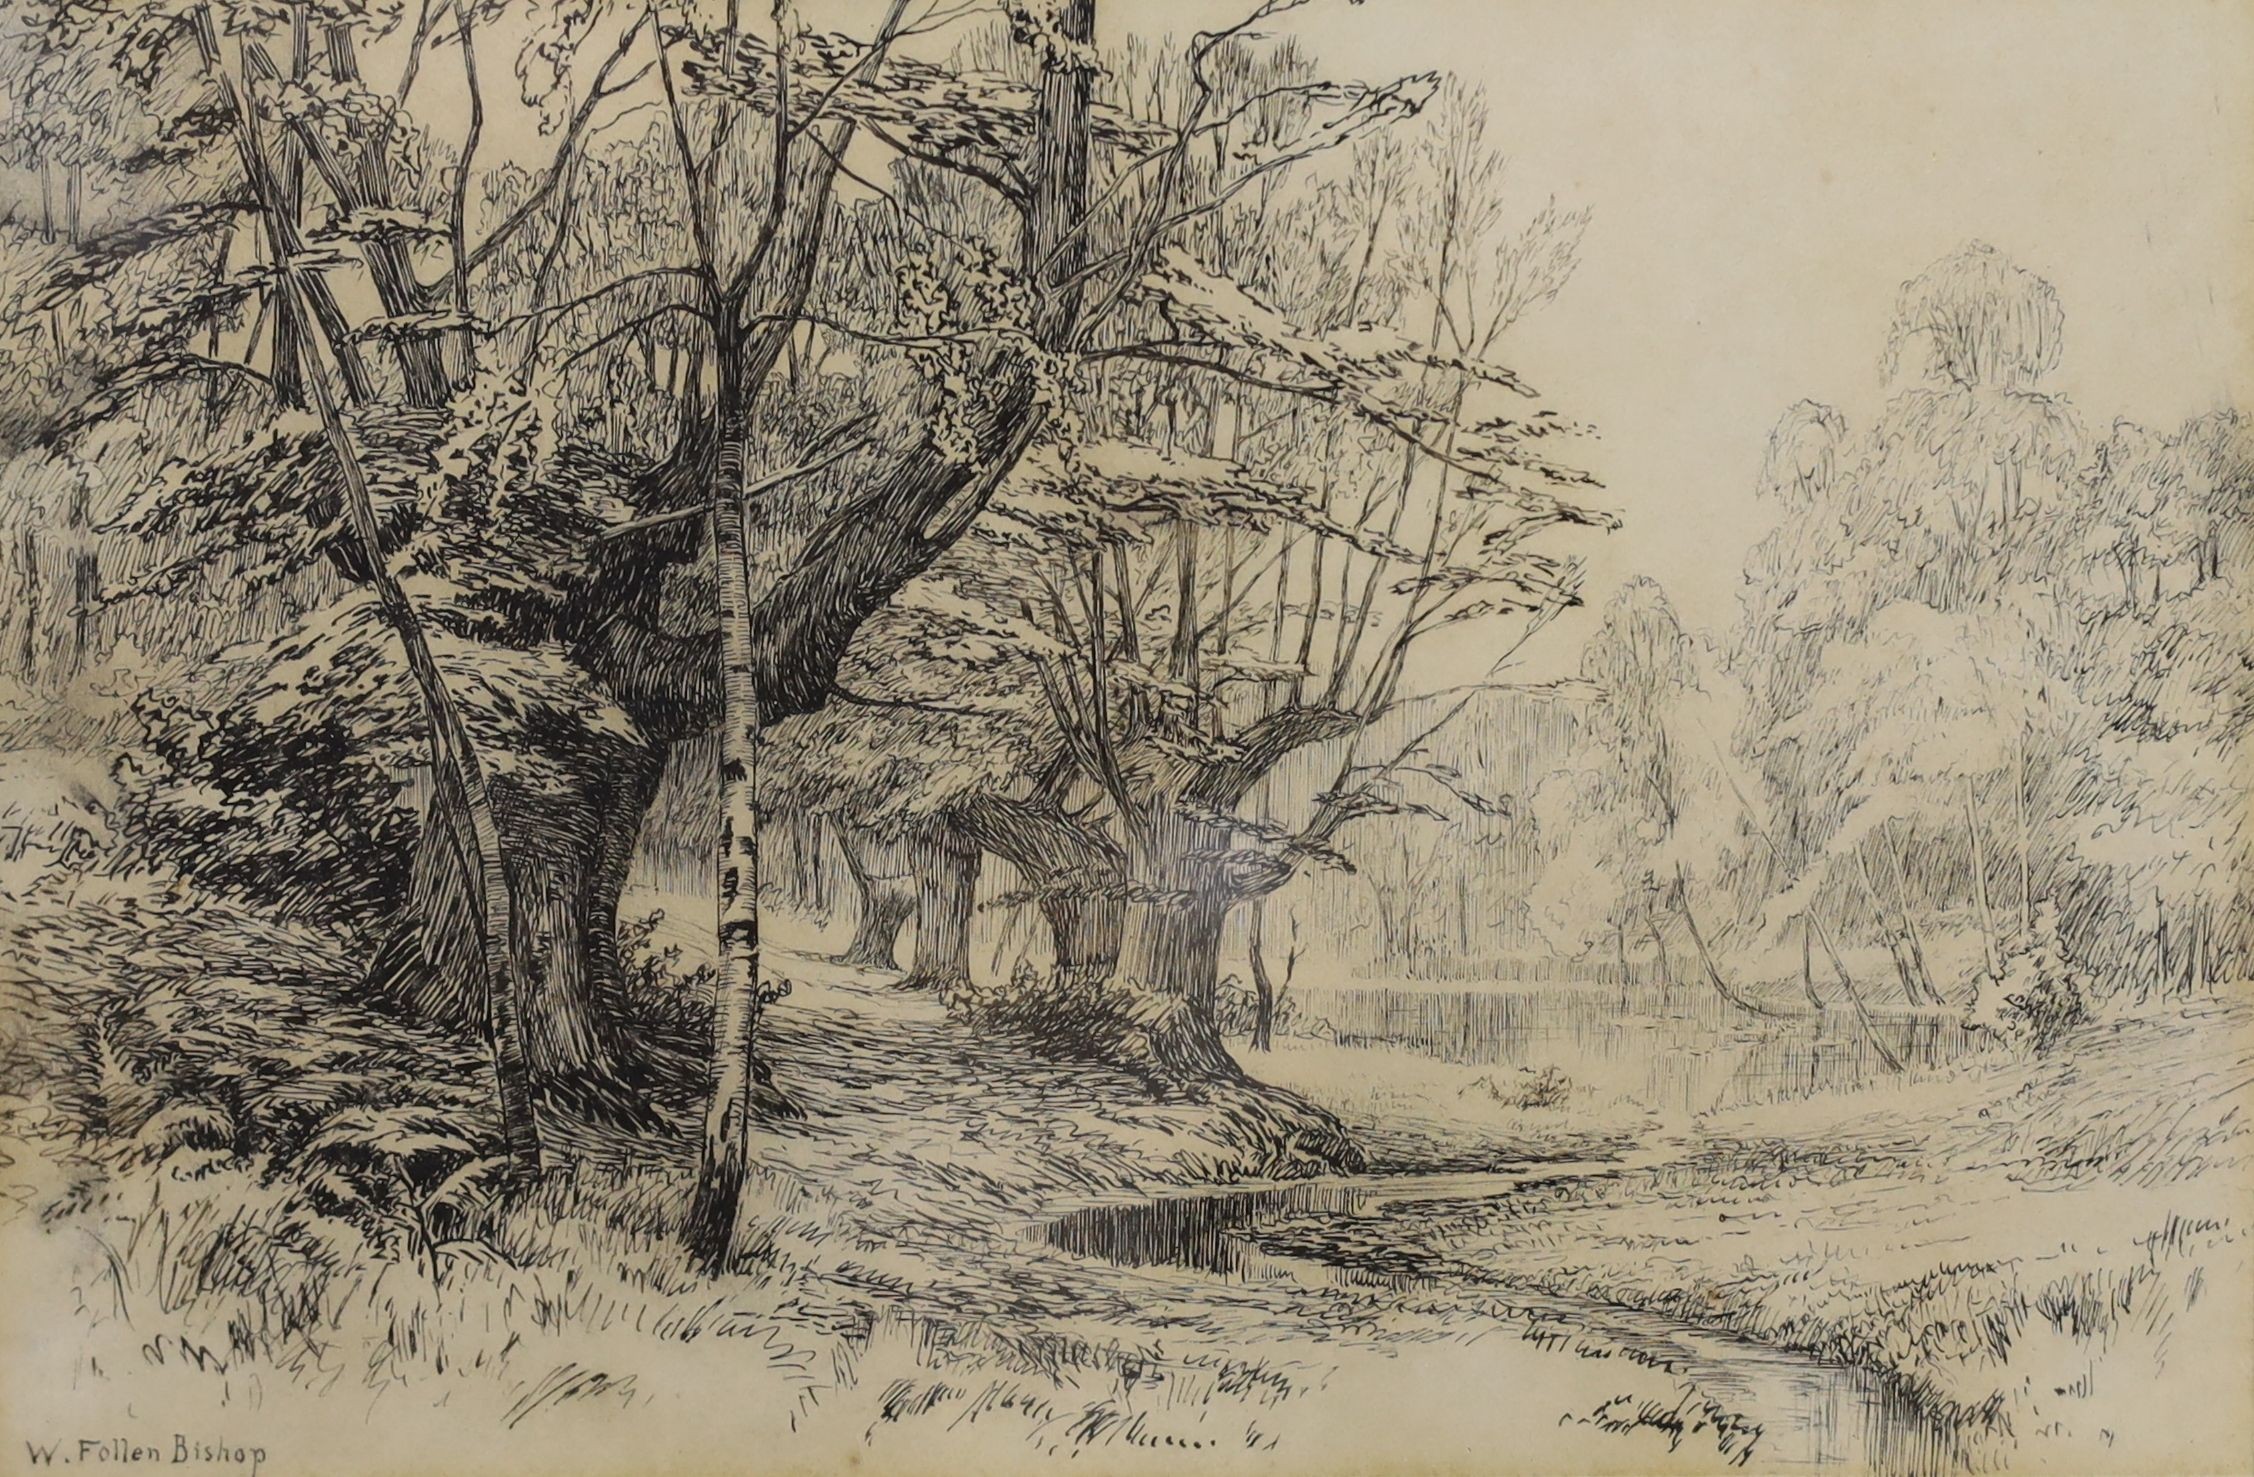 Walter Follen Bishop (1856-1936), pen and ink, Burnham Beeches, signed, 15 x 22cm